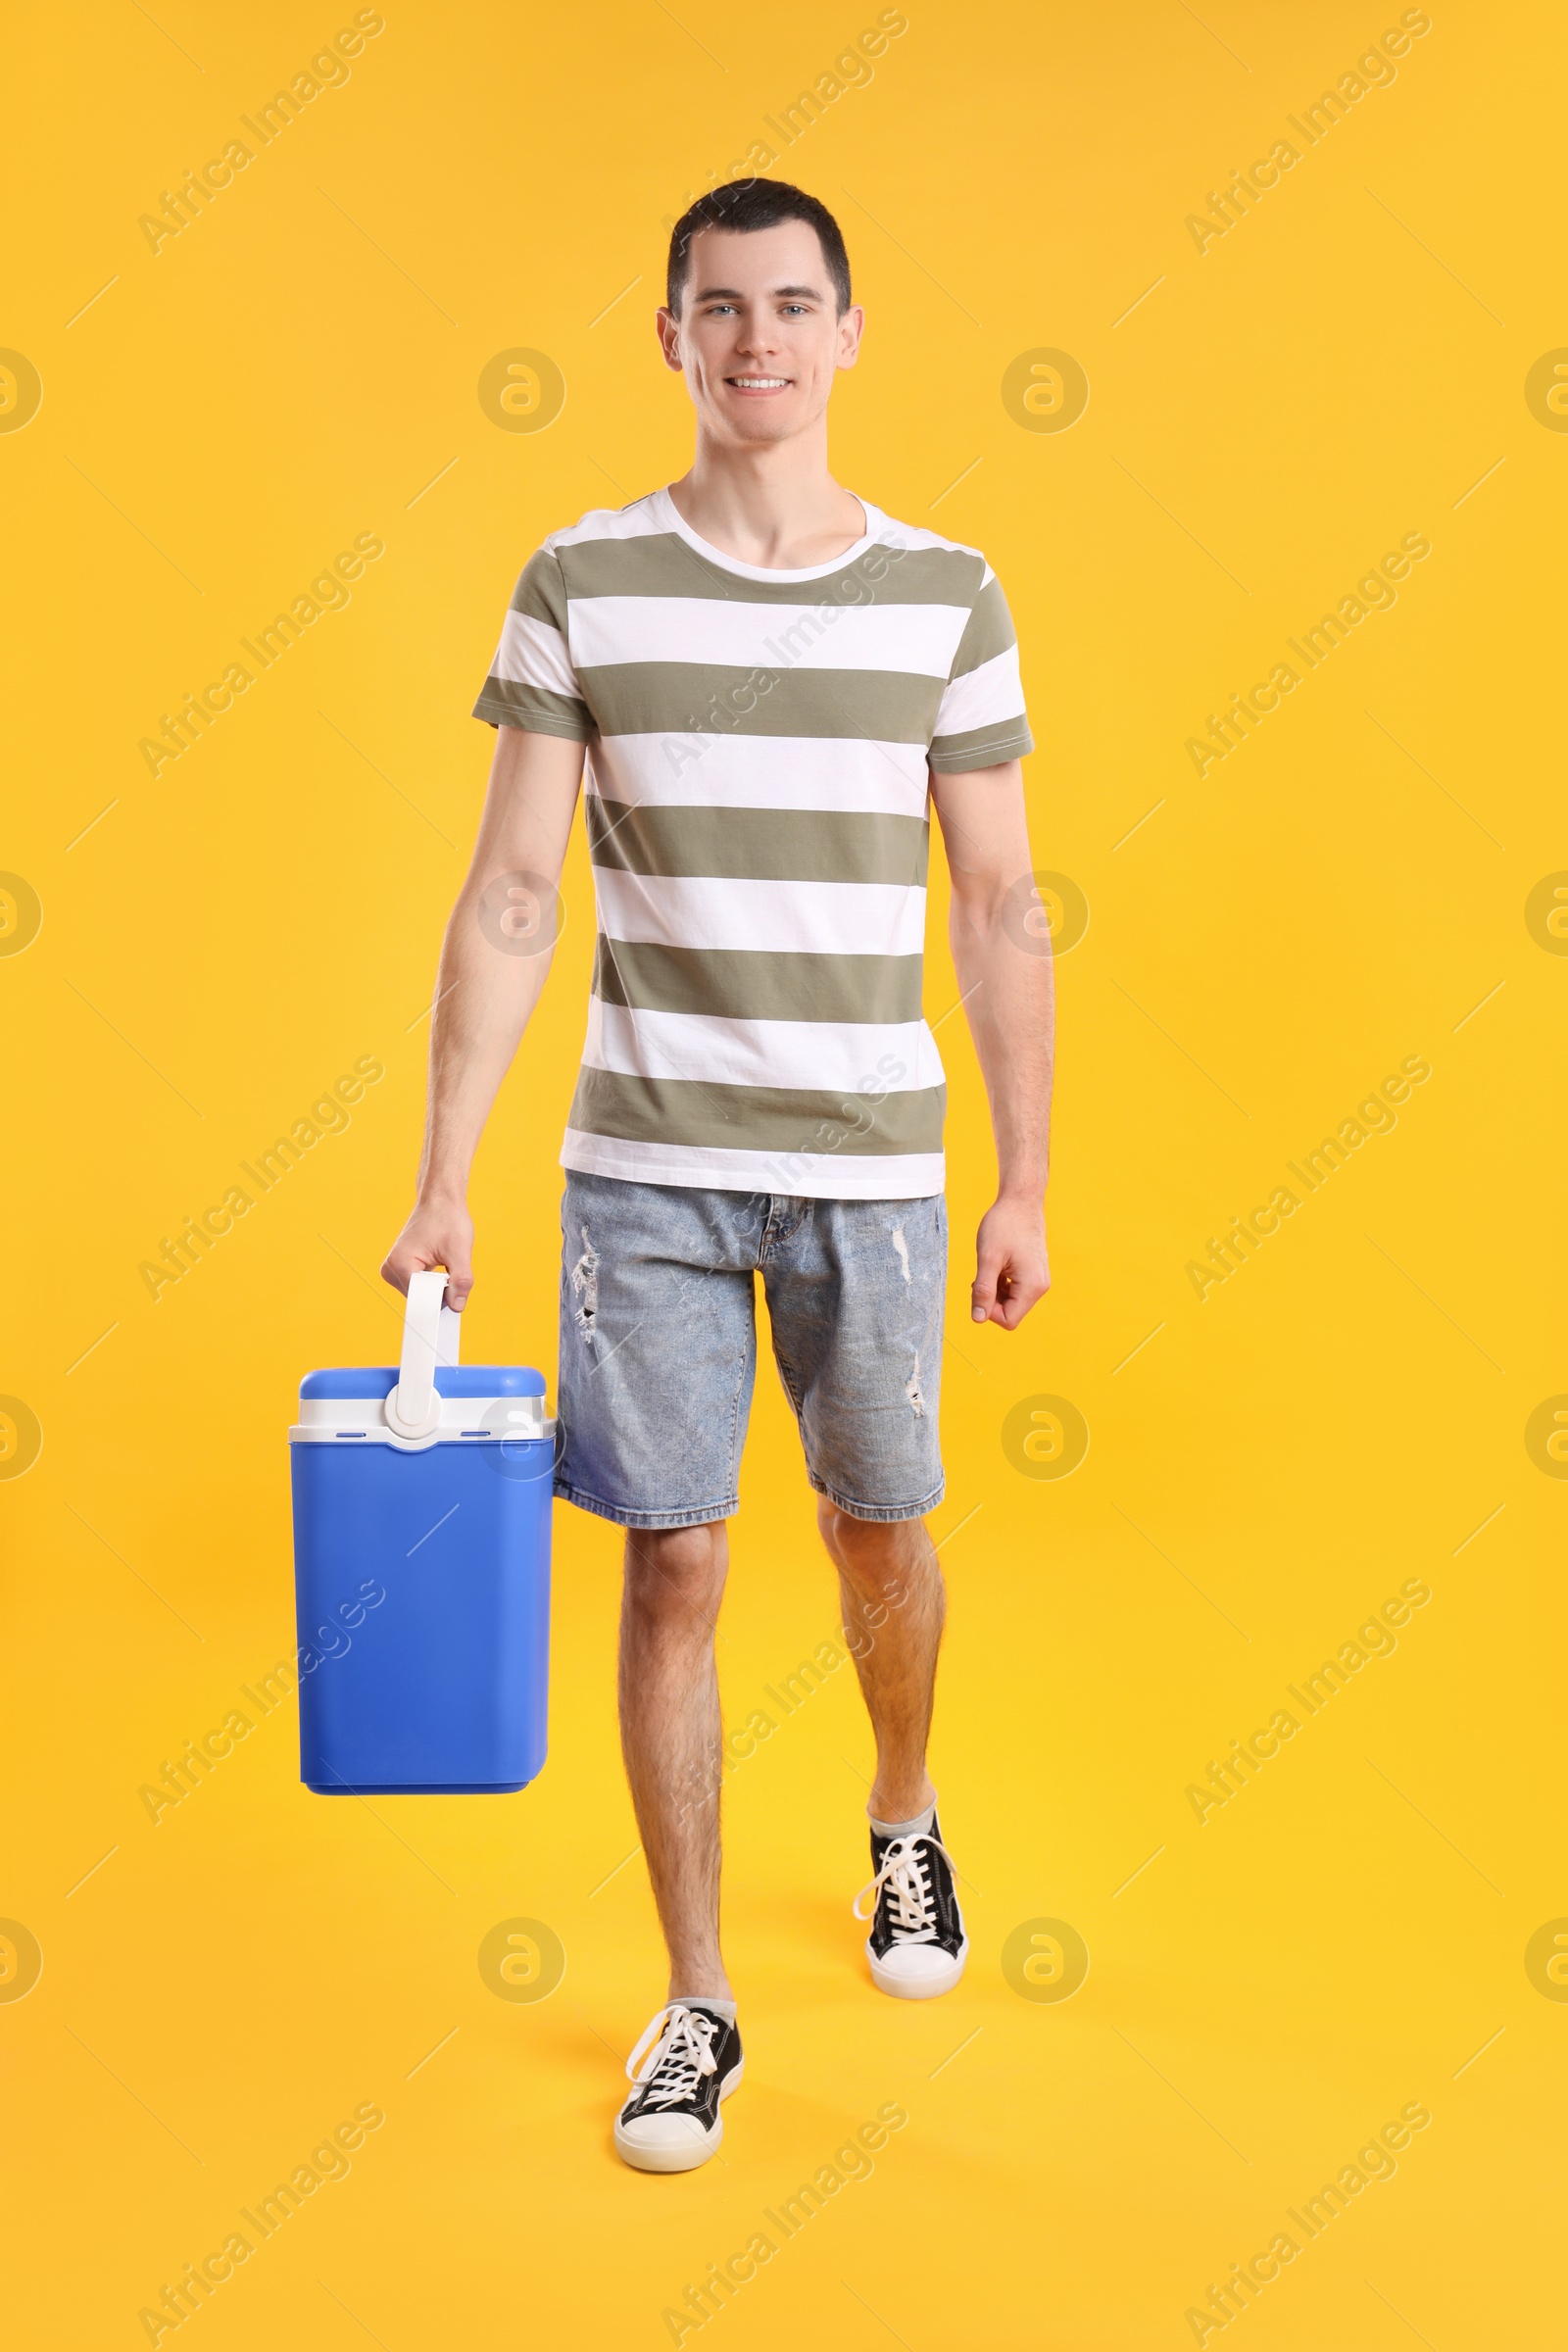 Photo of Man with blue cool box walking on orange background